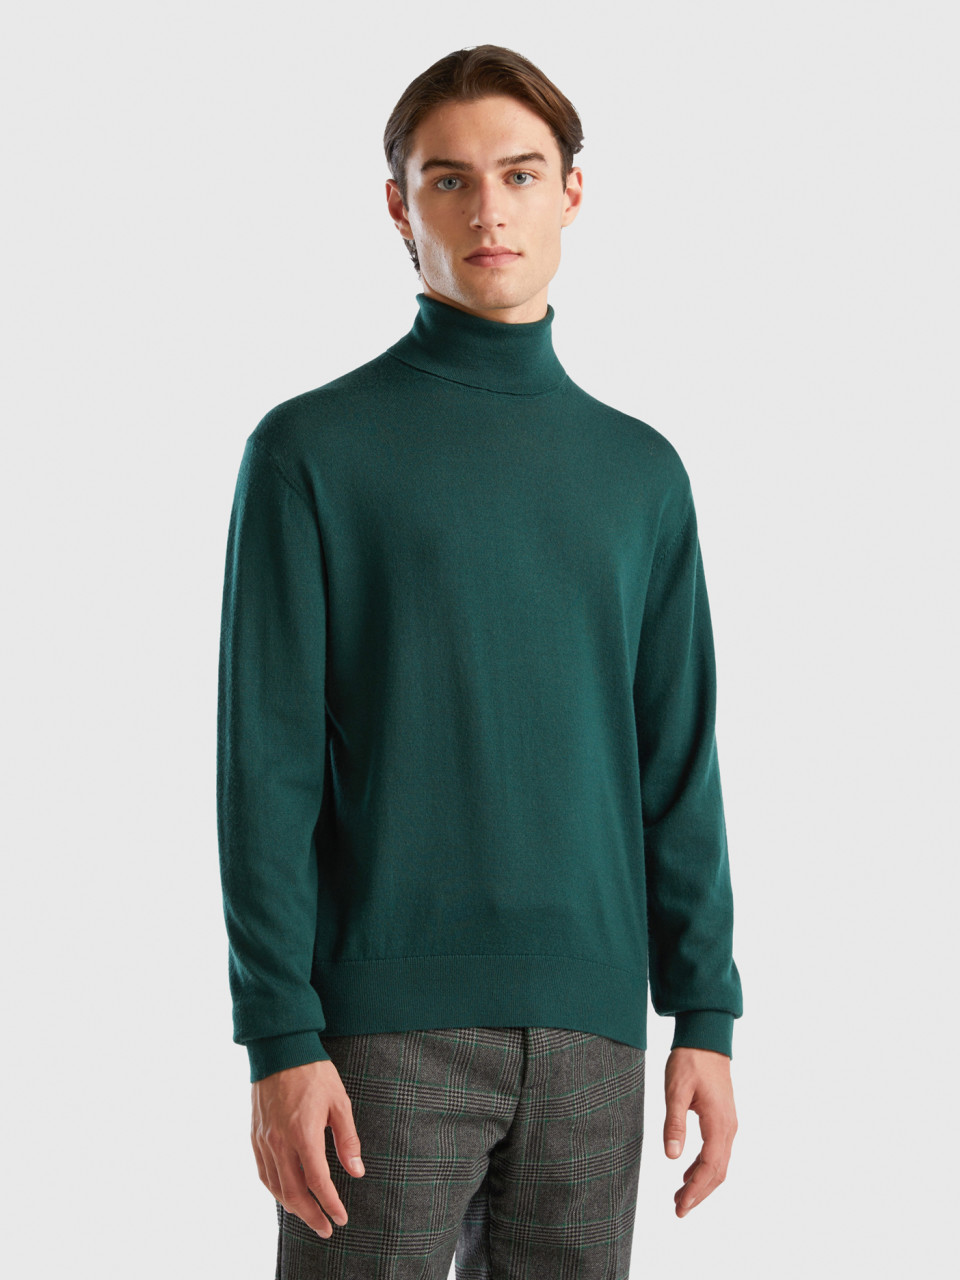 Benetton, Turtleneck In Pure Merino Wool, Green, Men